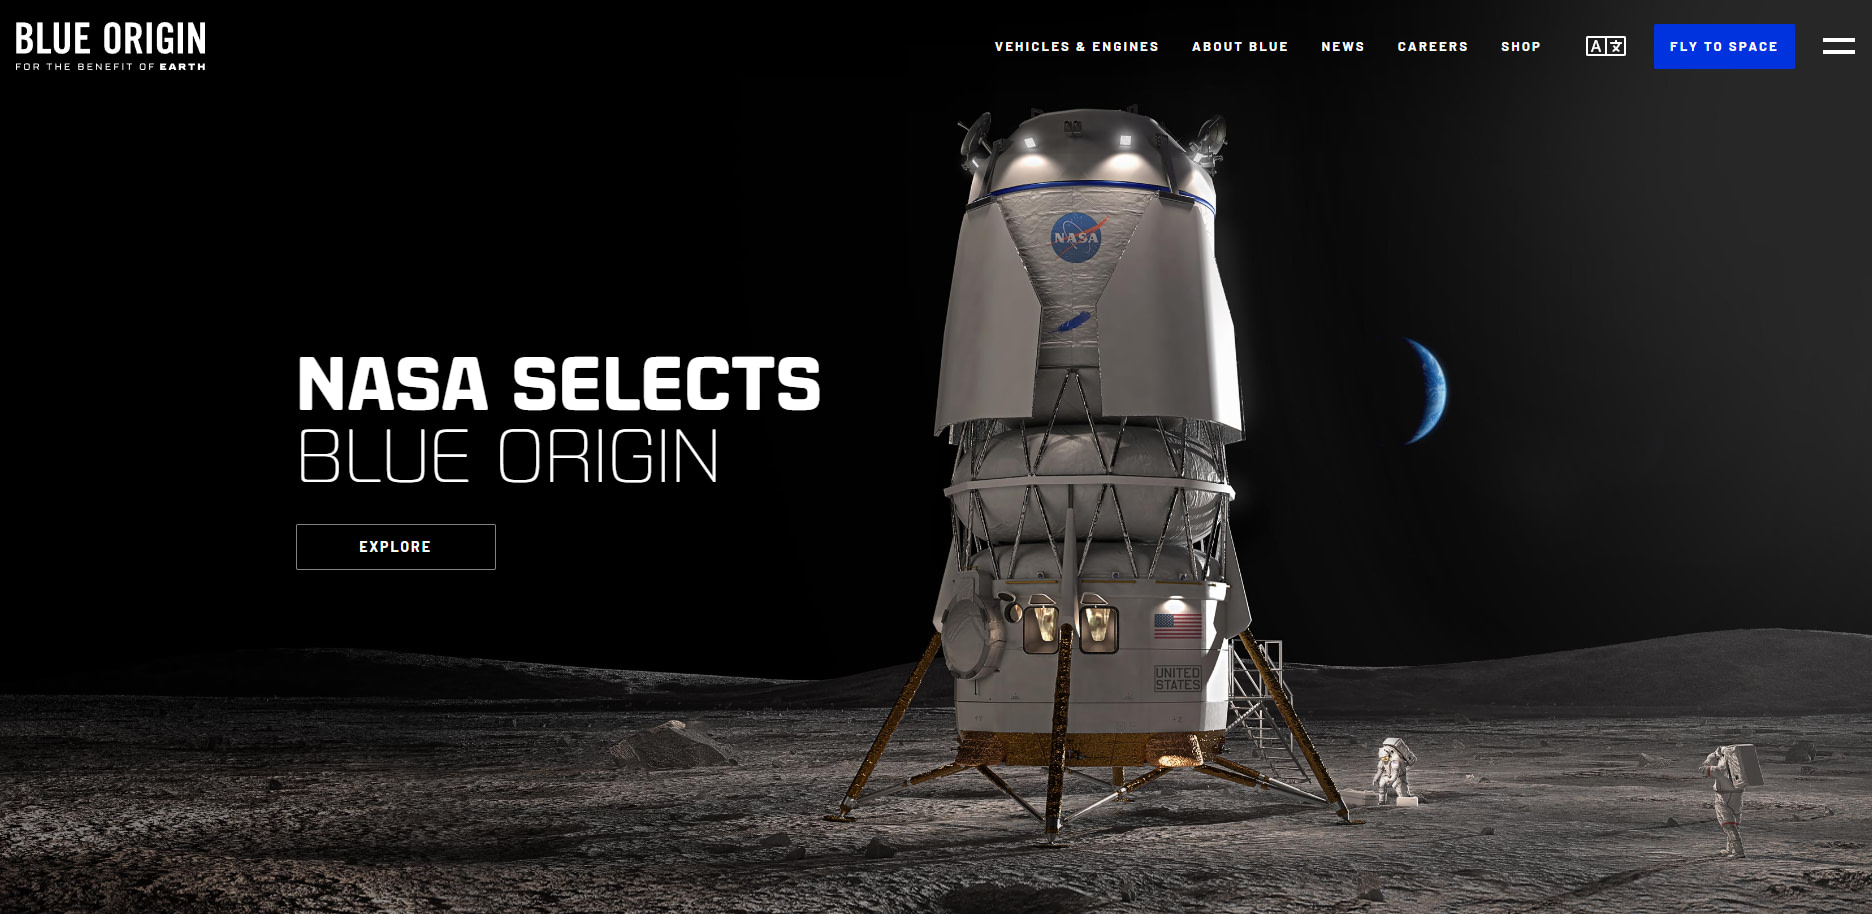 How to buy blue origin stock: Blue Origin homepage